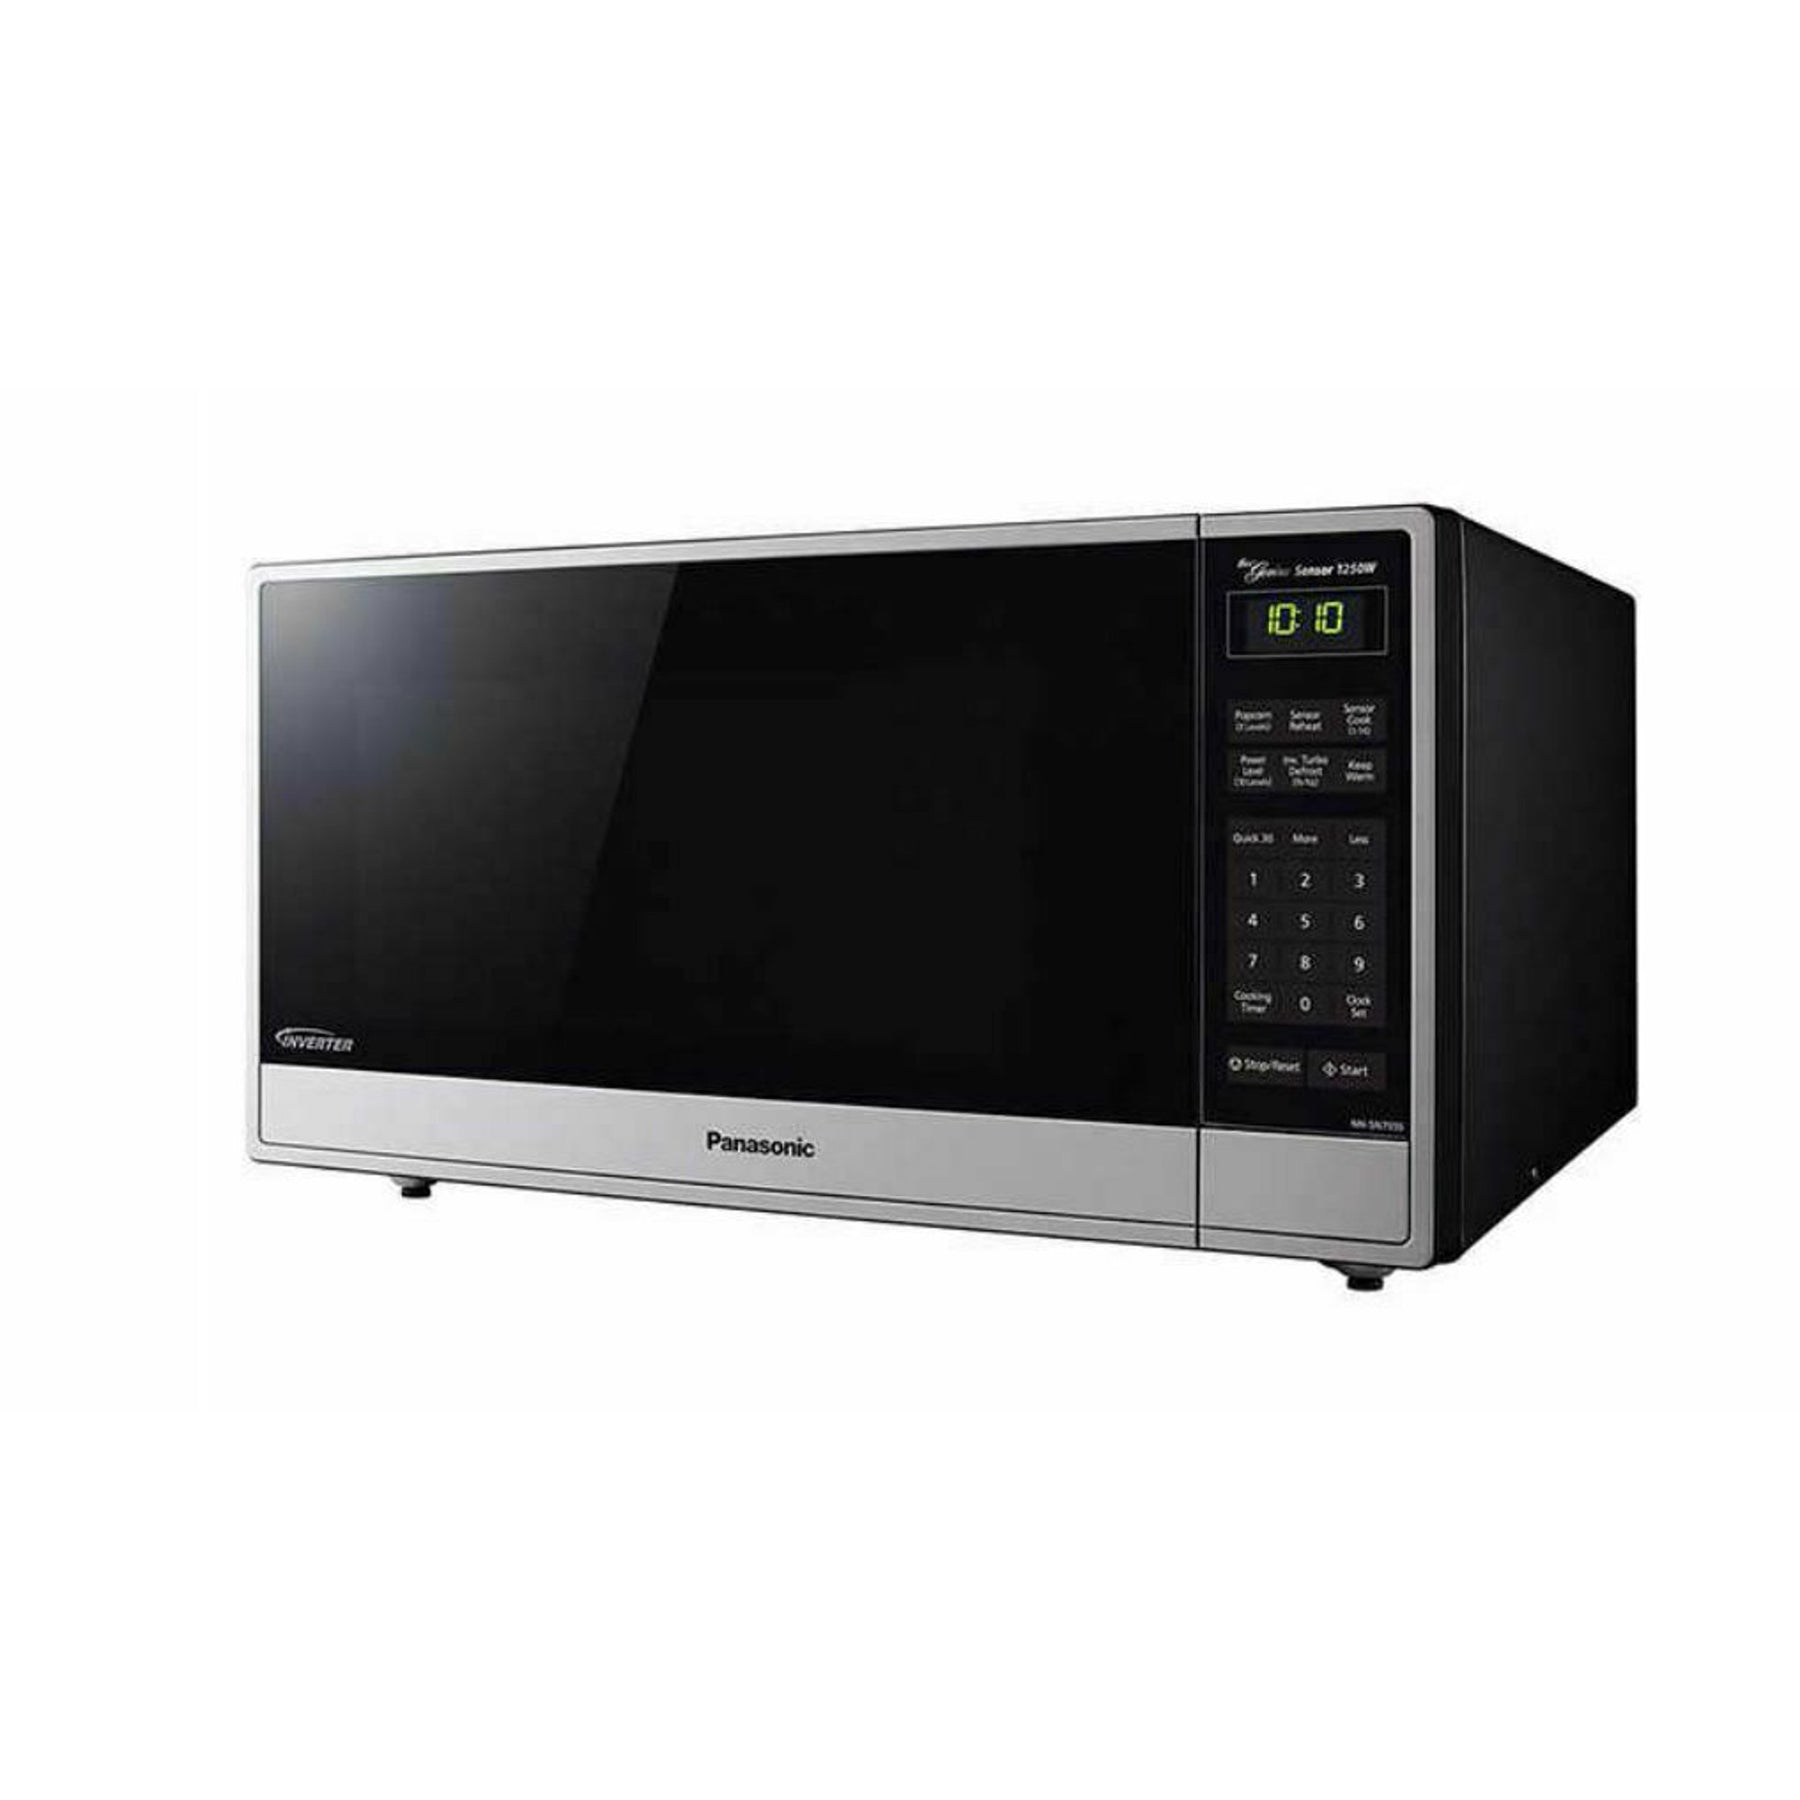 Panasonic 1250W Microwave Oven - Stainless Steel